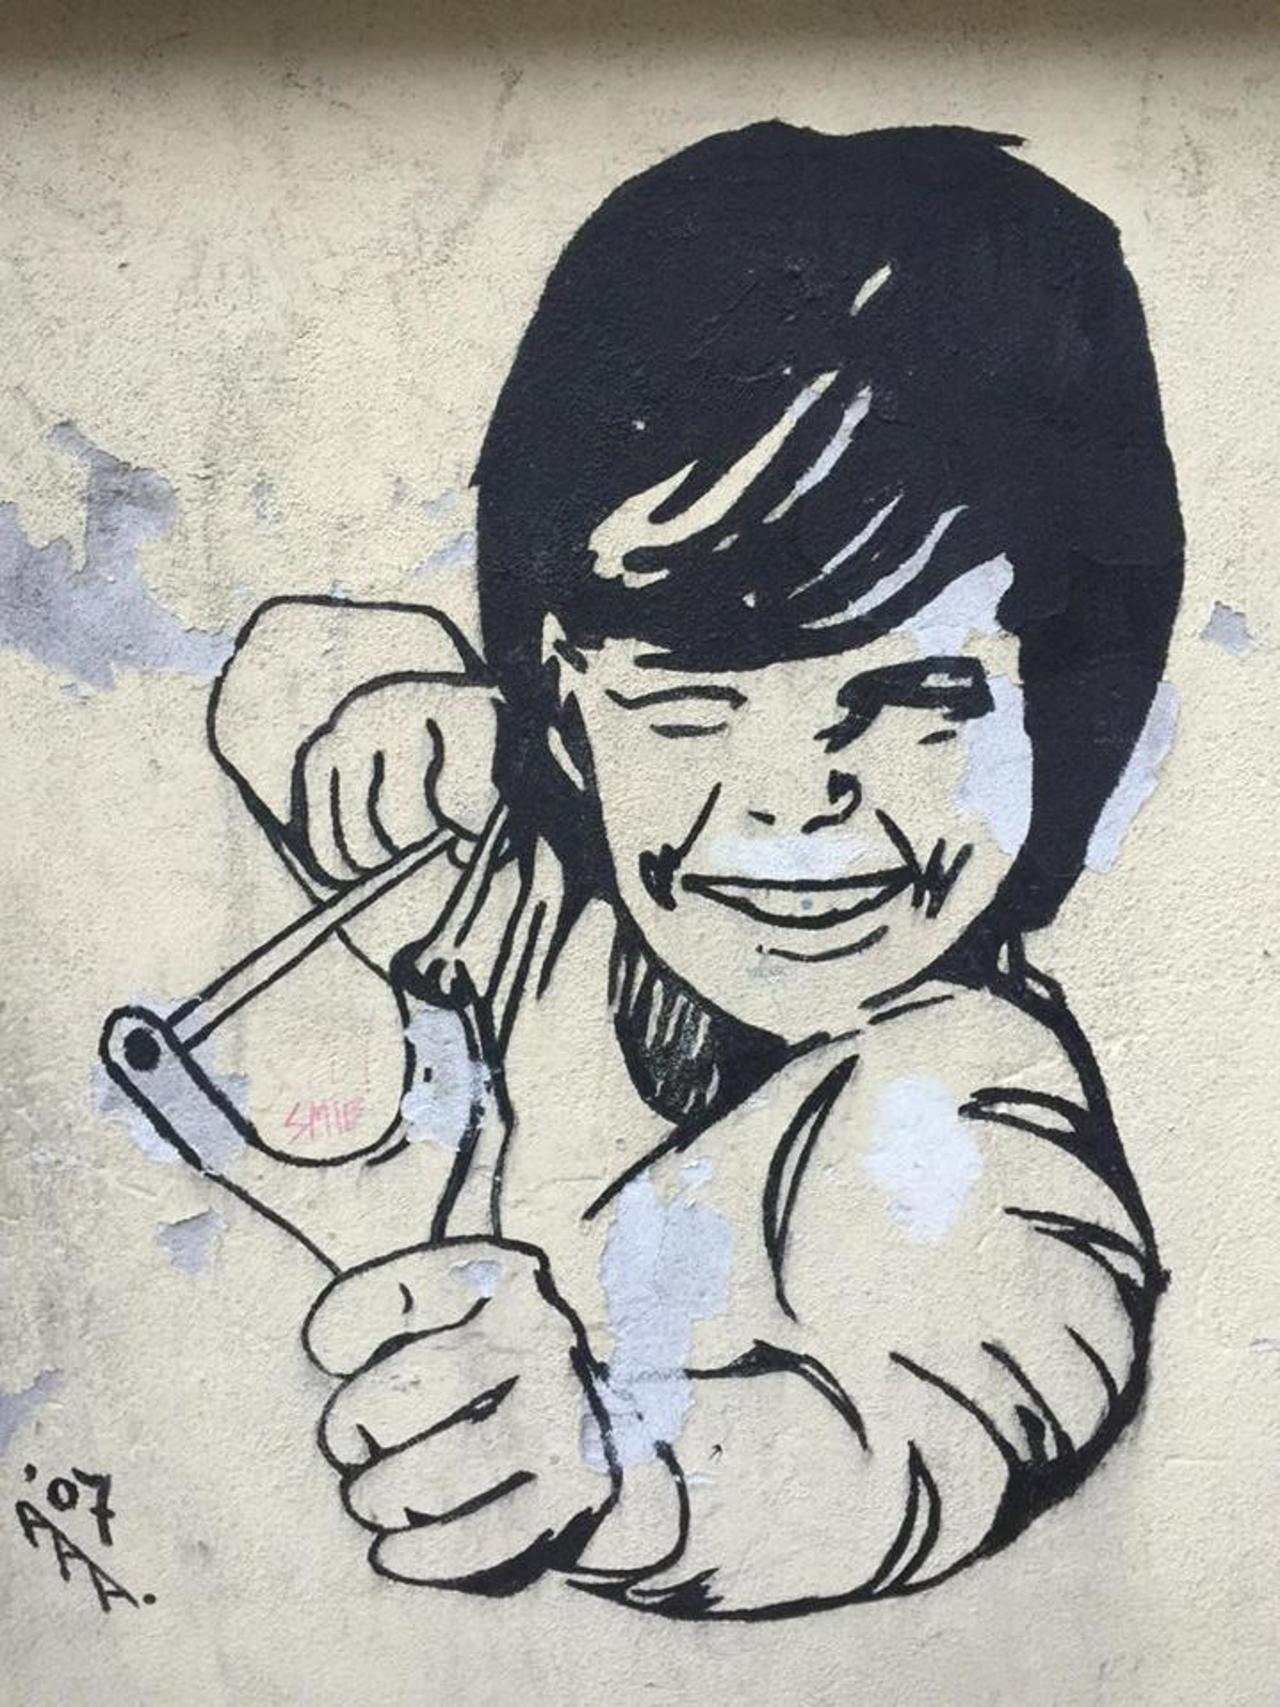 Saw this friend from last year again today #Amsterdam #graffiti #streetart http://t.co/NkJLRGsFUf